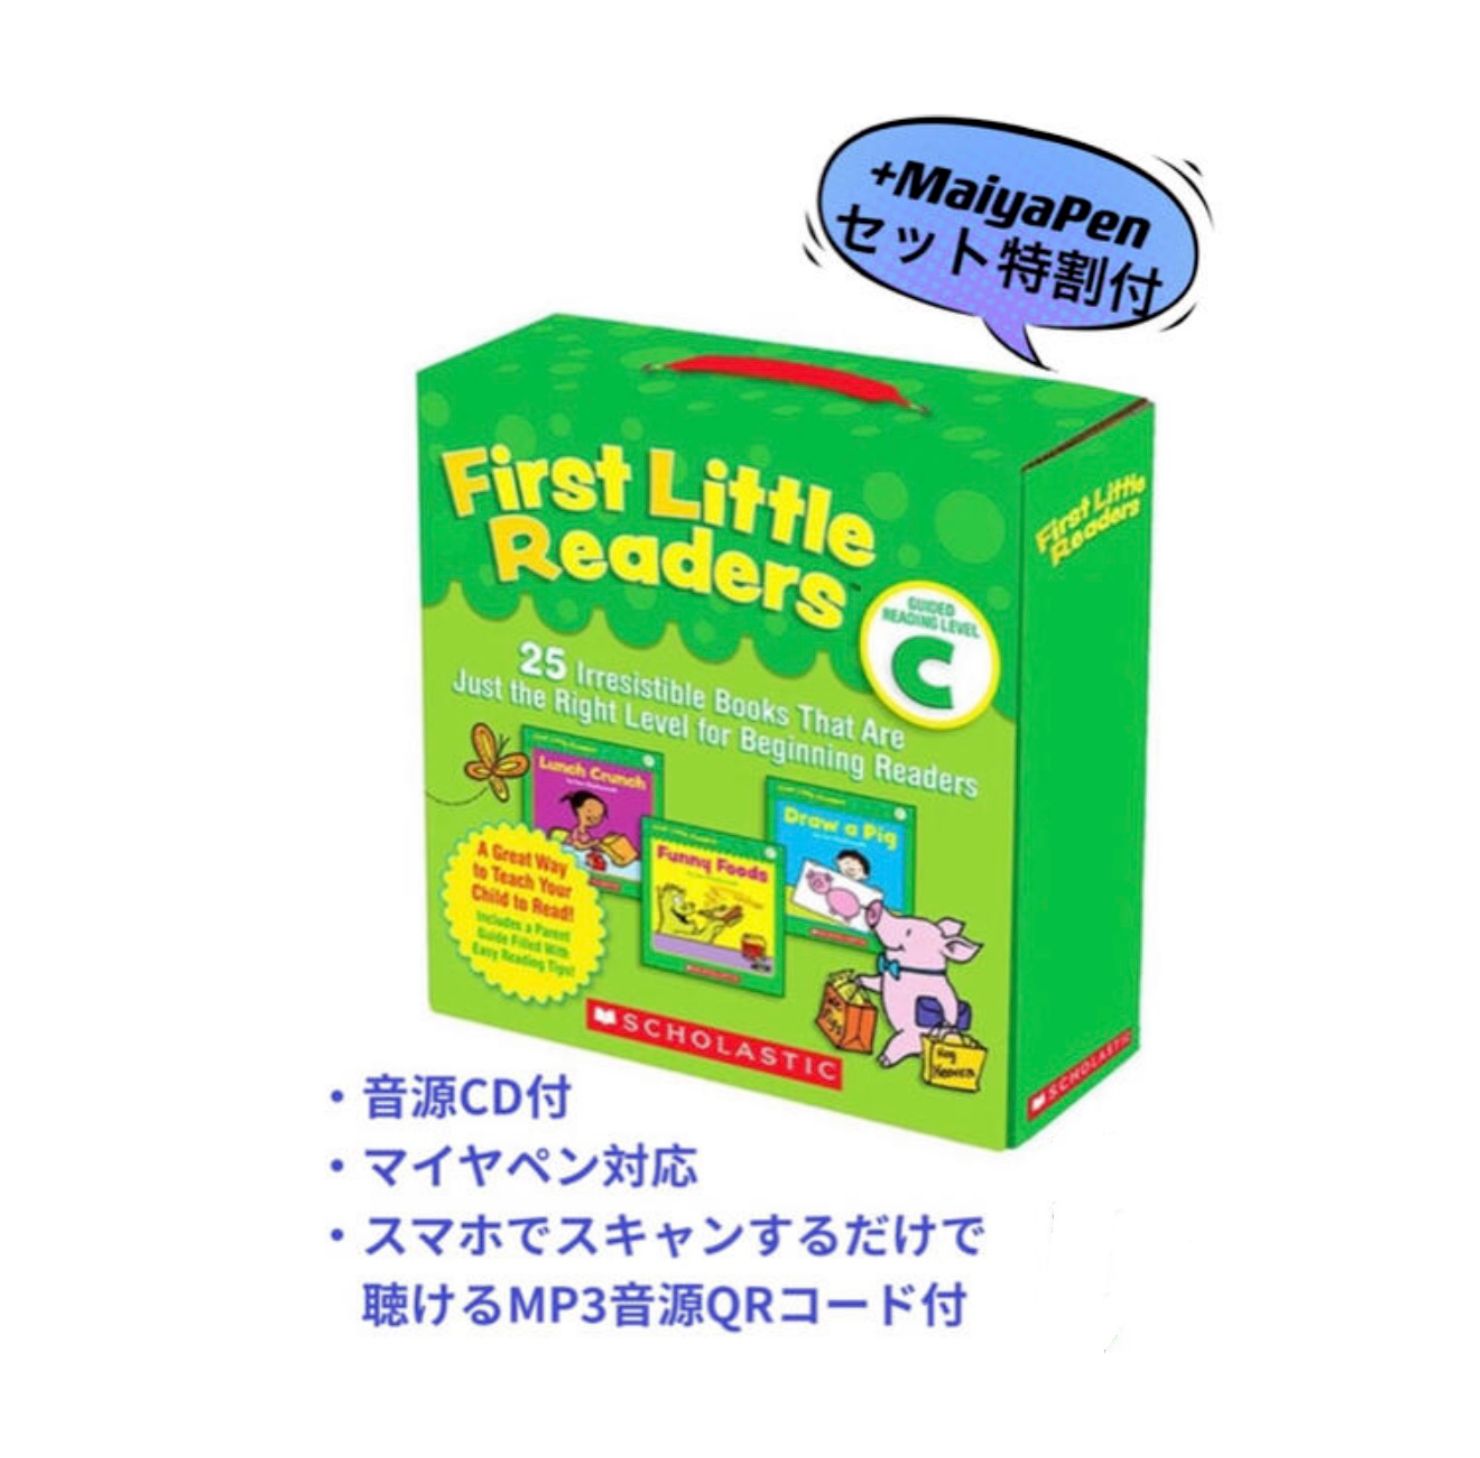 first little readers 新品 英語絵本 maiyapen対応